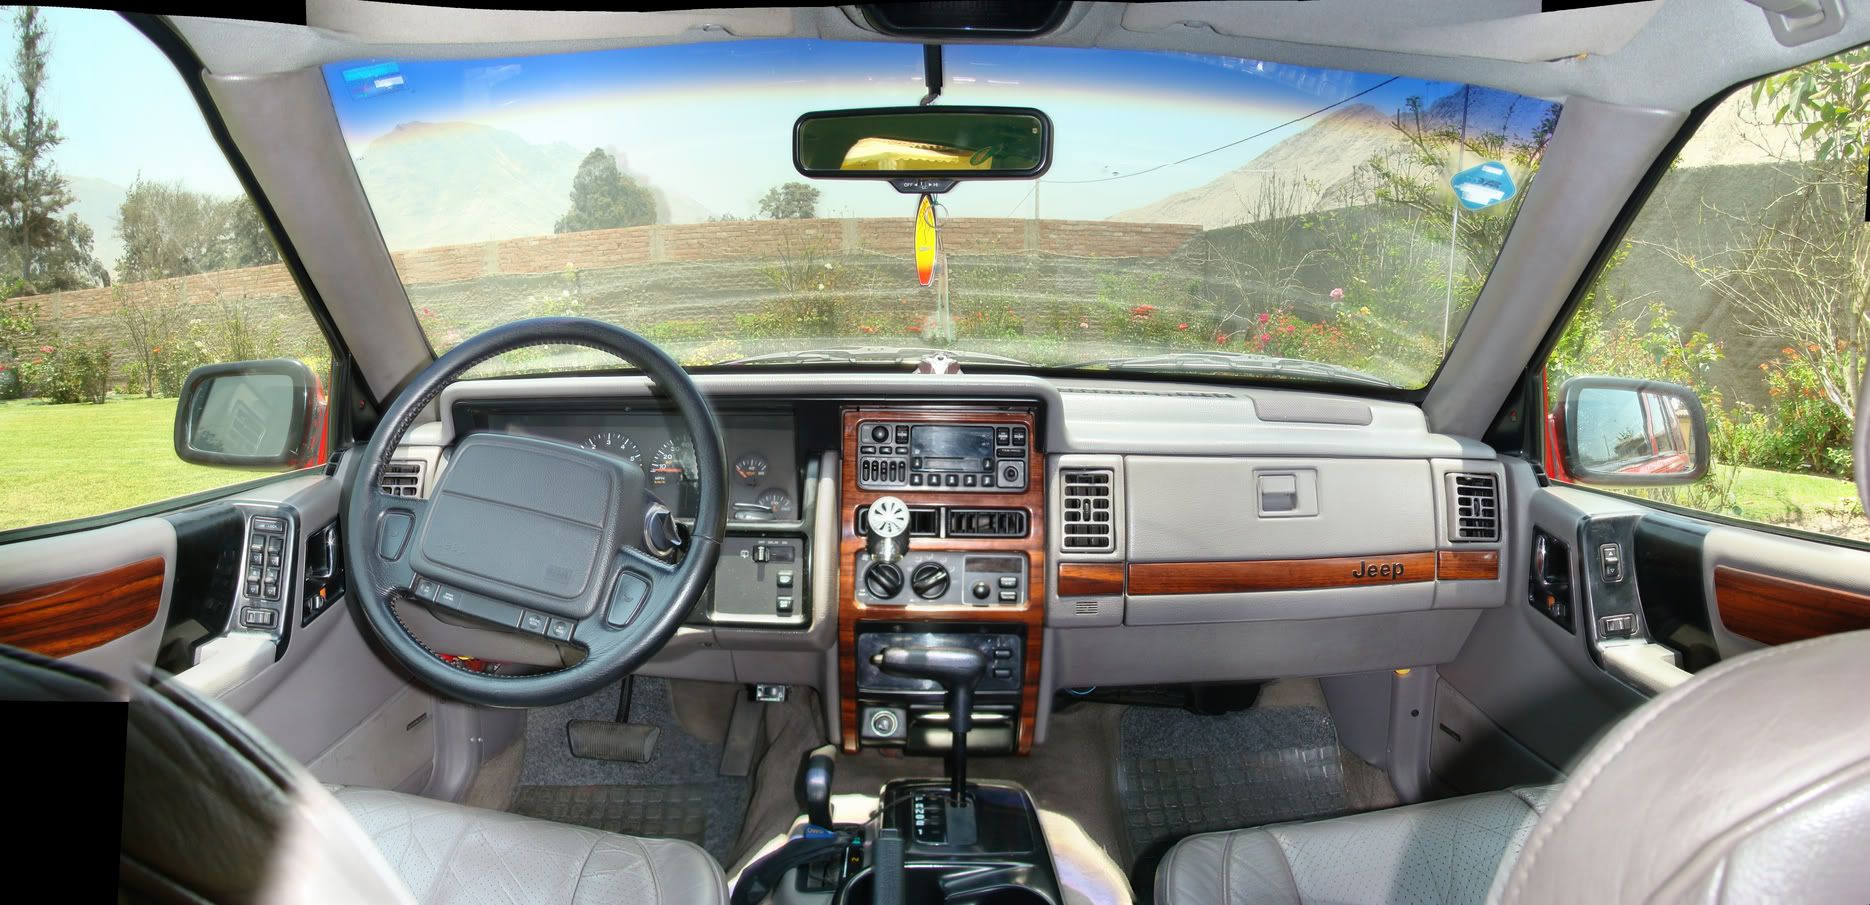 1993 Jeep grand cherokee console display #2